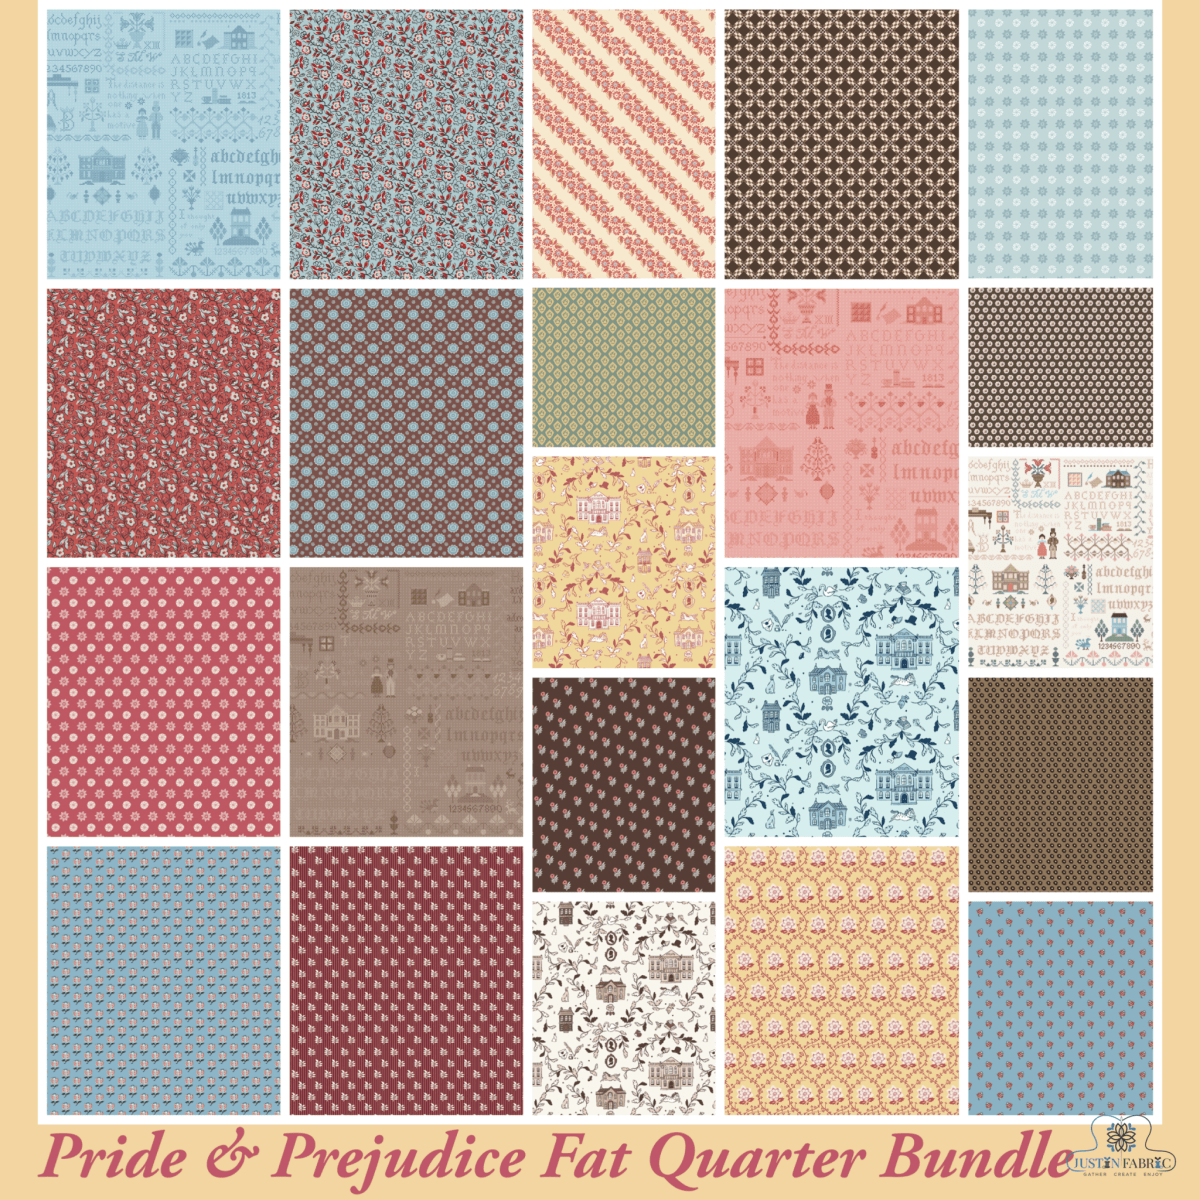 Pride & Prejudice Fat Quarter Bundle from Riley Blake Designs-22 pieces -FQ-13770-22 - Justin Fabric!